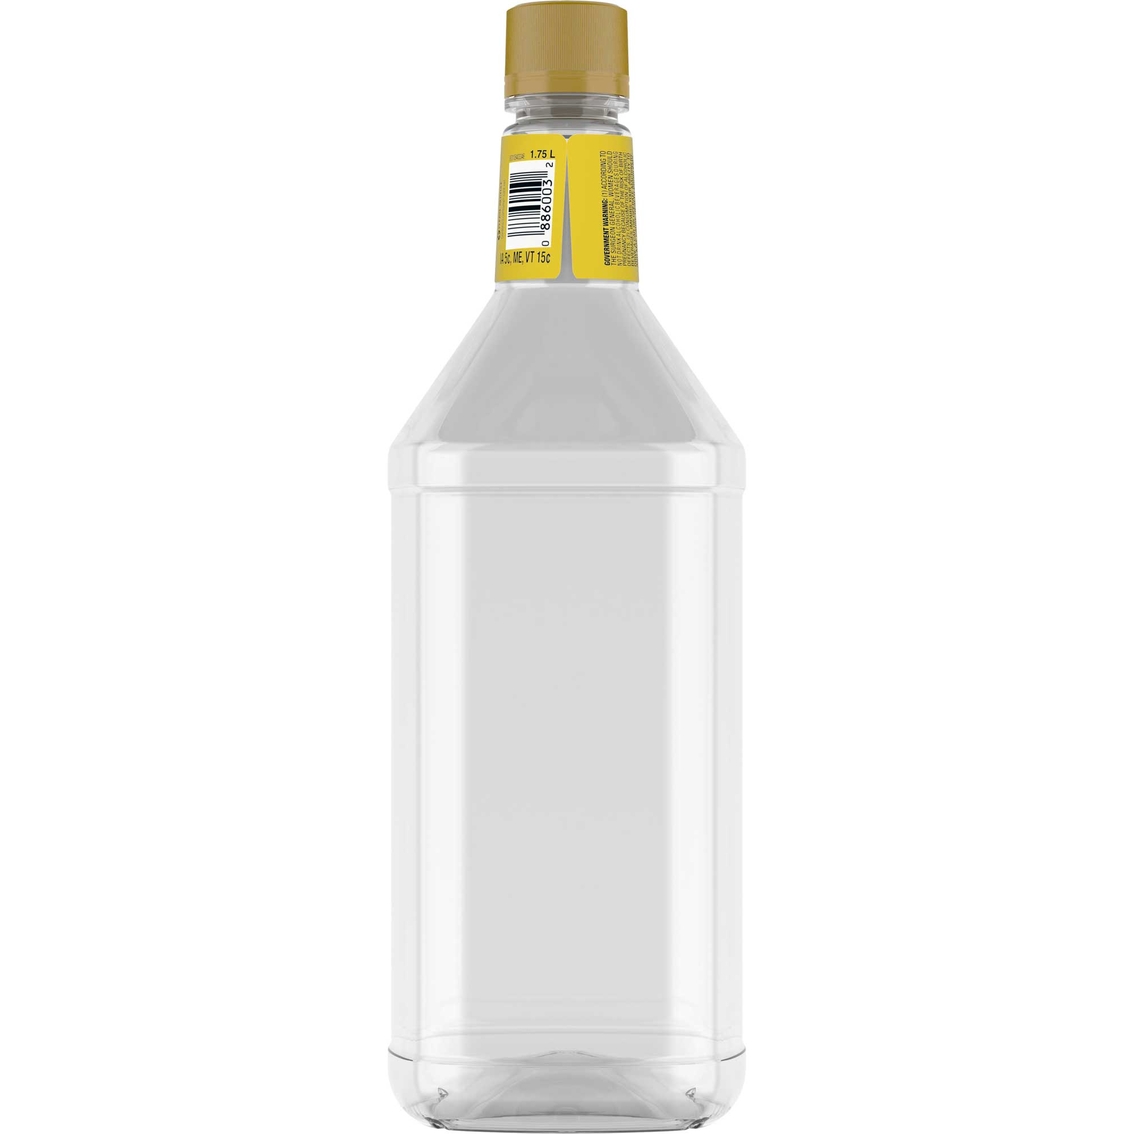 Gordon's Dry Gin 1.75L - Image 2 of 2